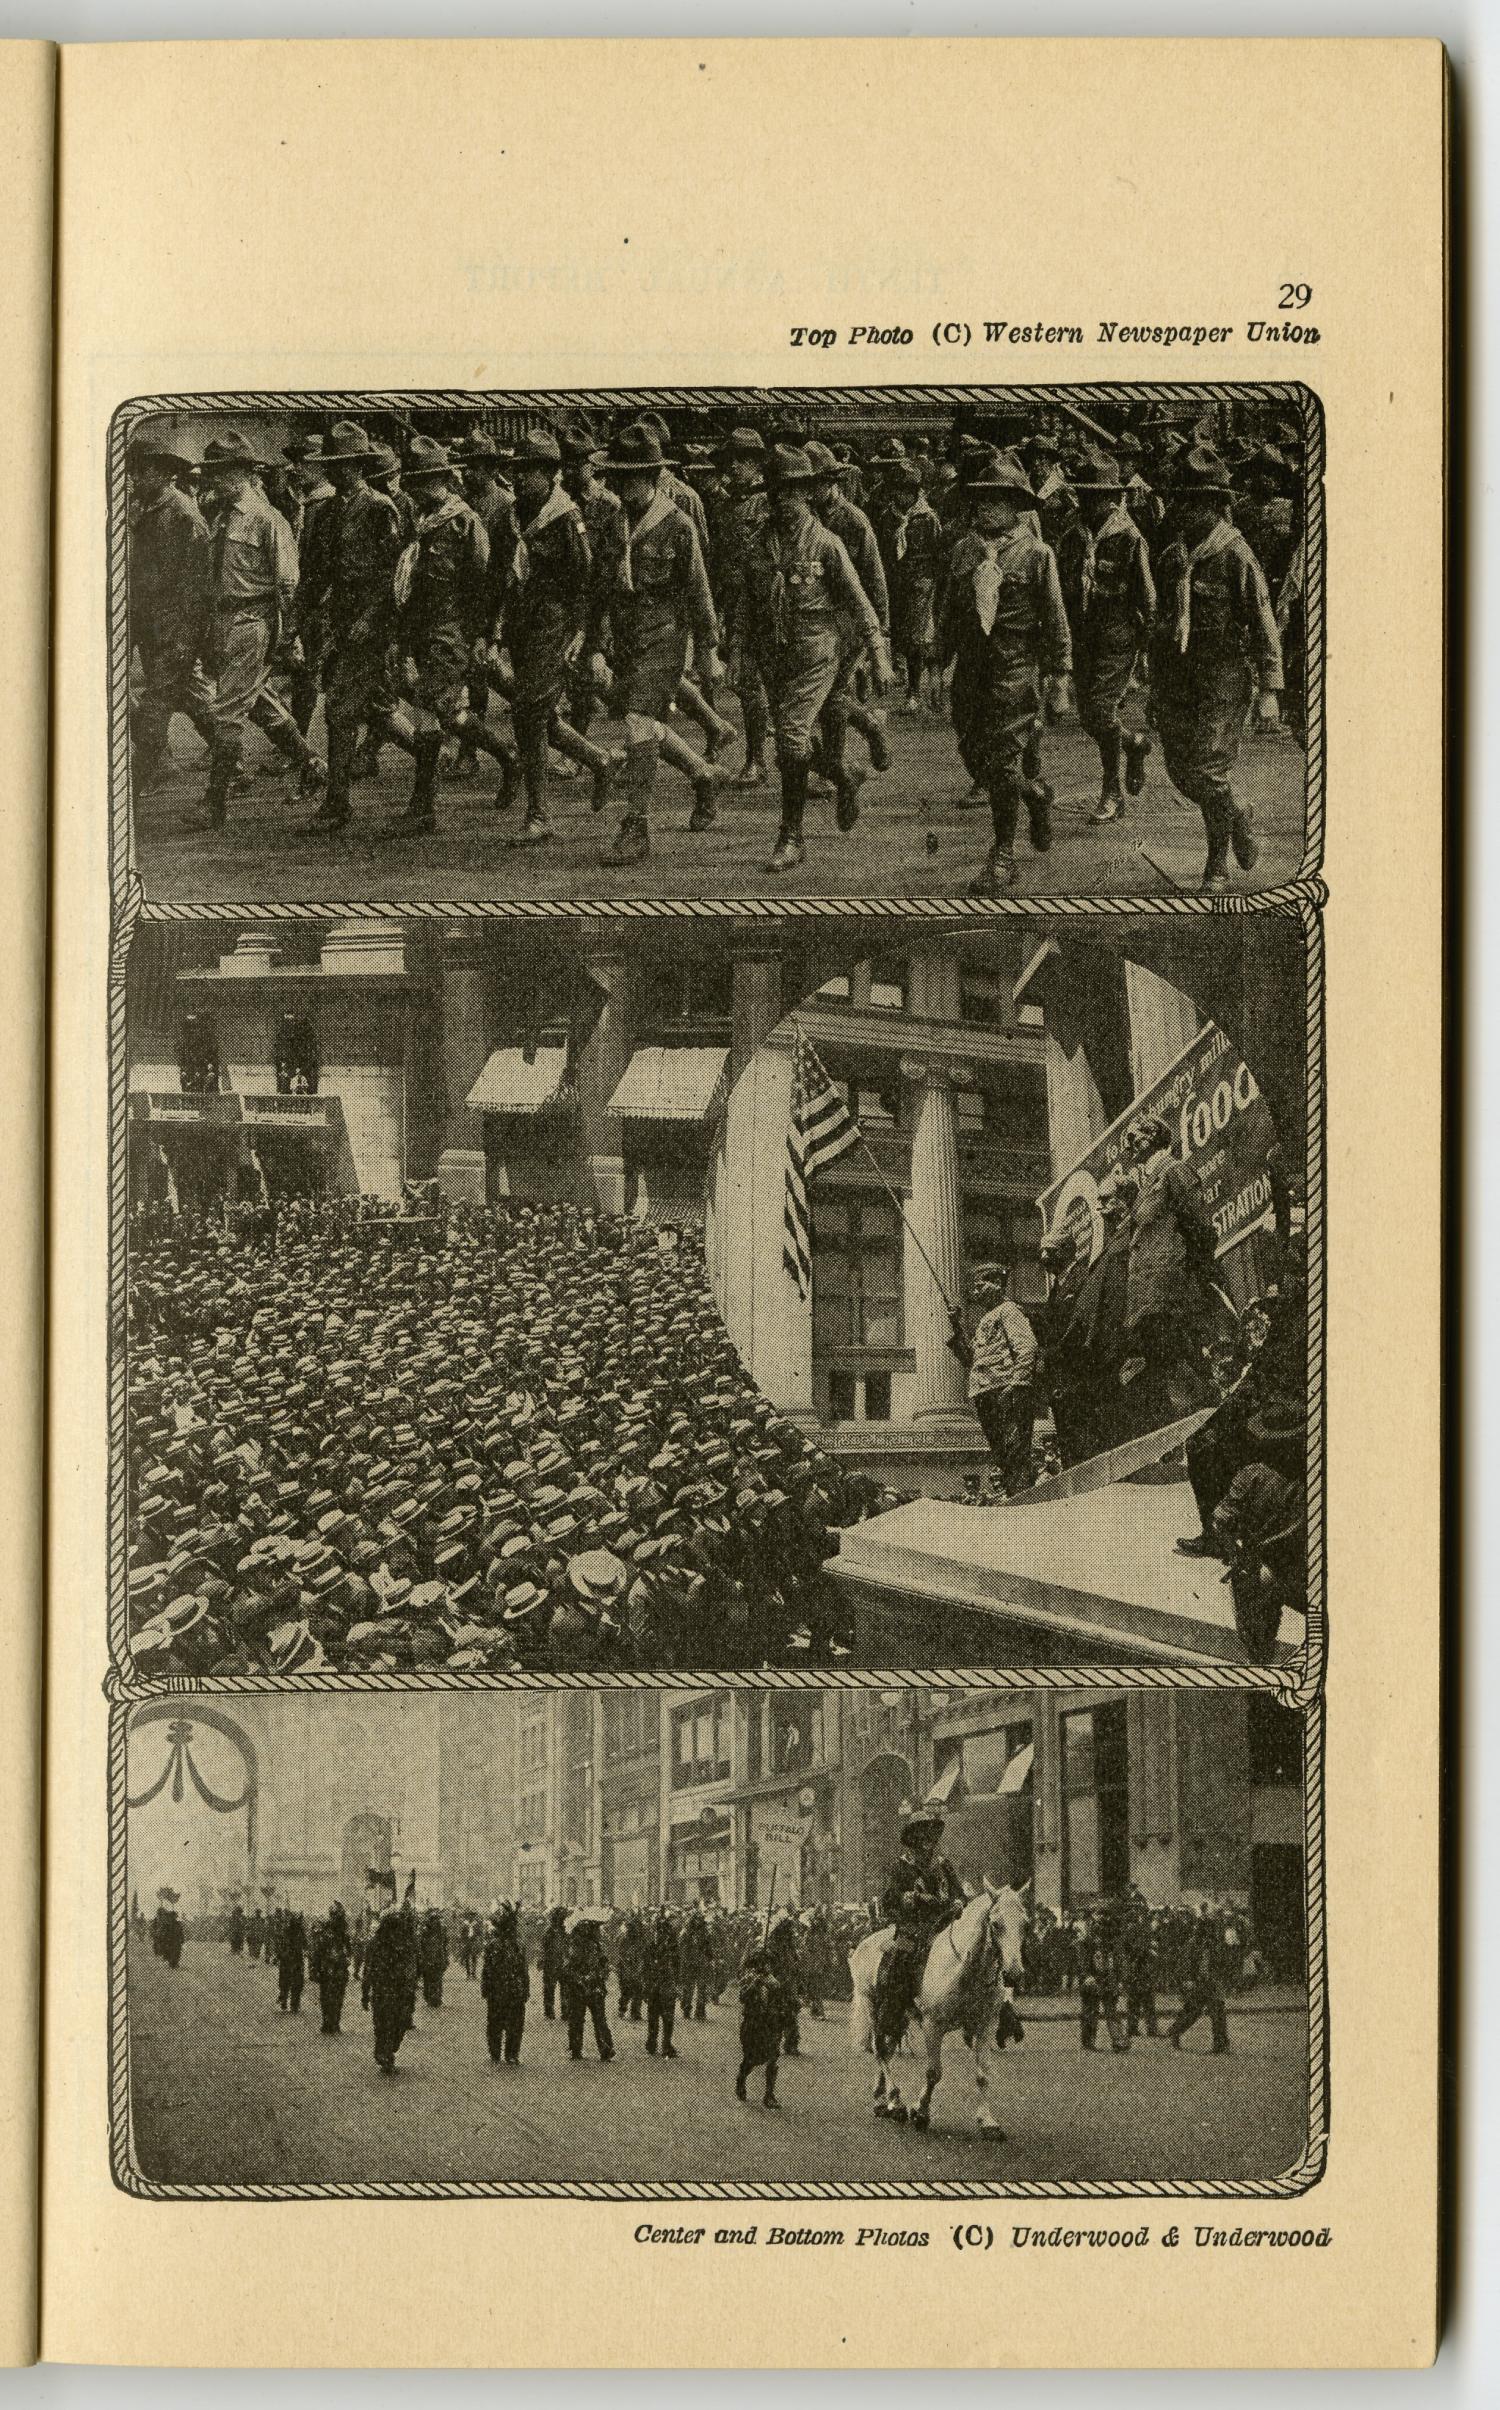 Scouting, Volume 8, Number 8, April 8, 1920
                                                
                                                    29
                                                